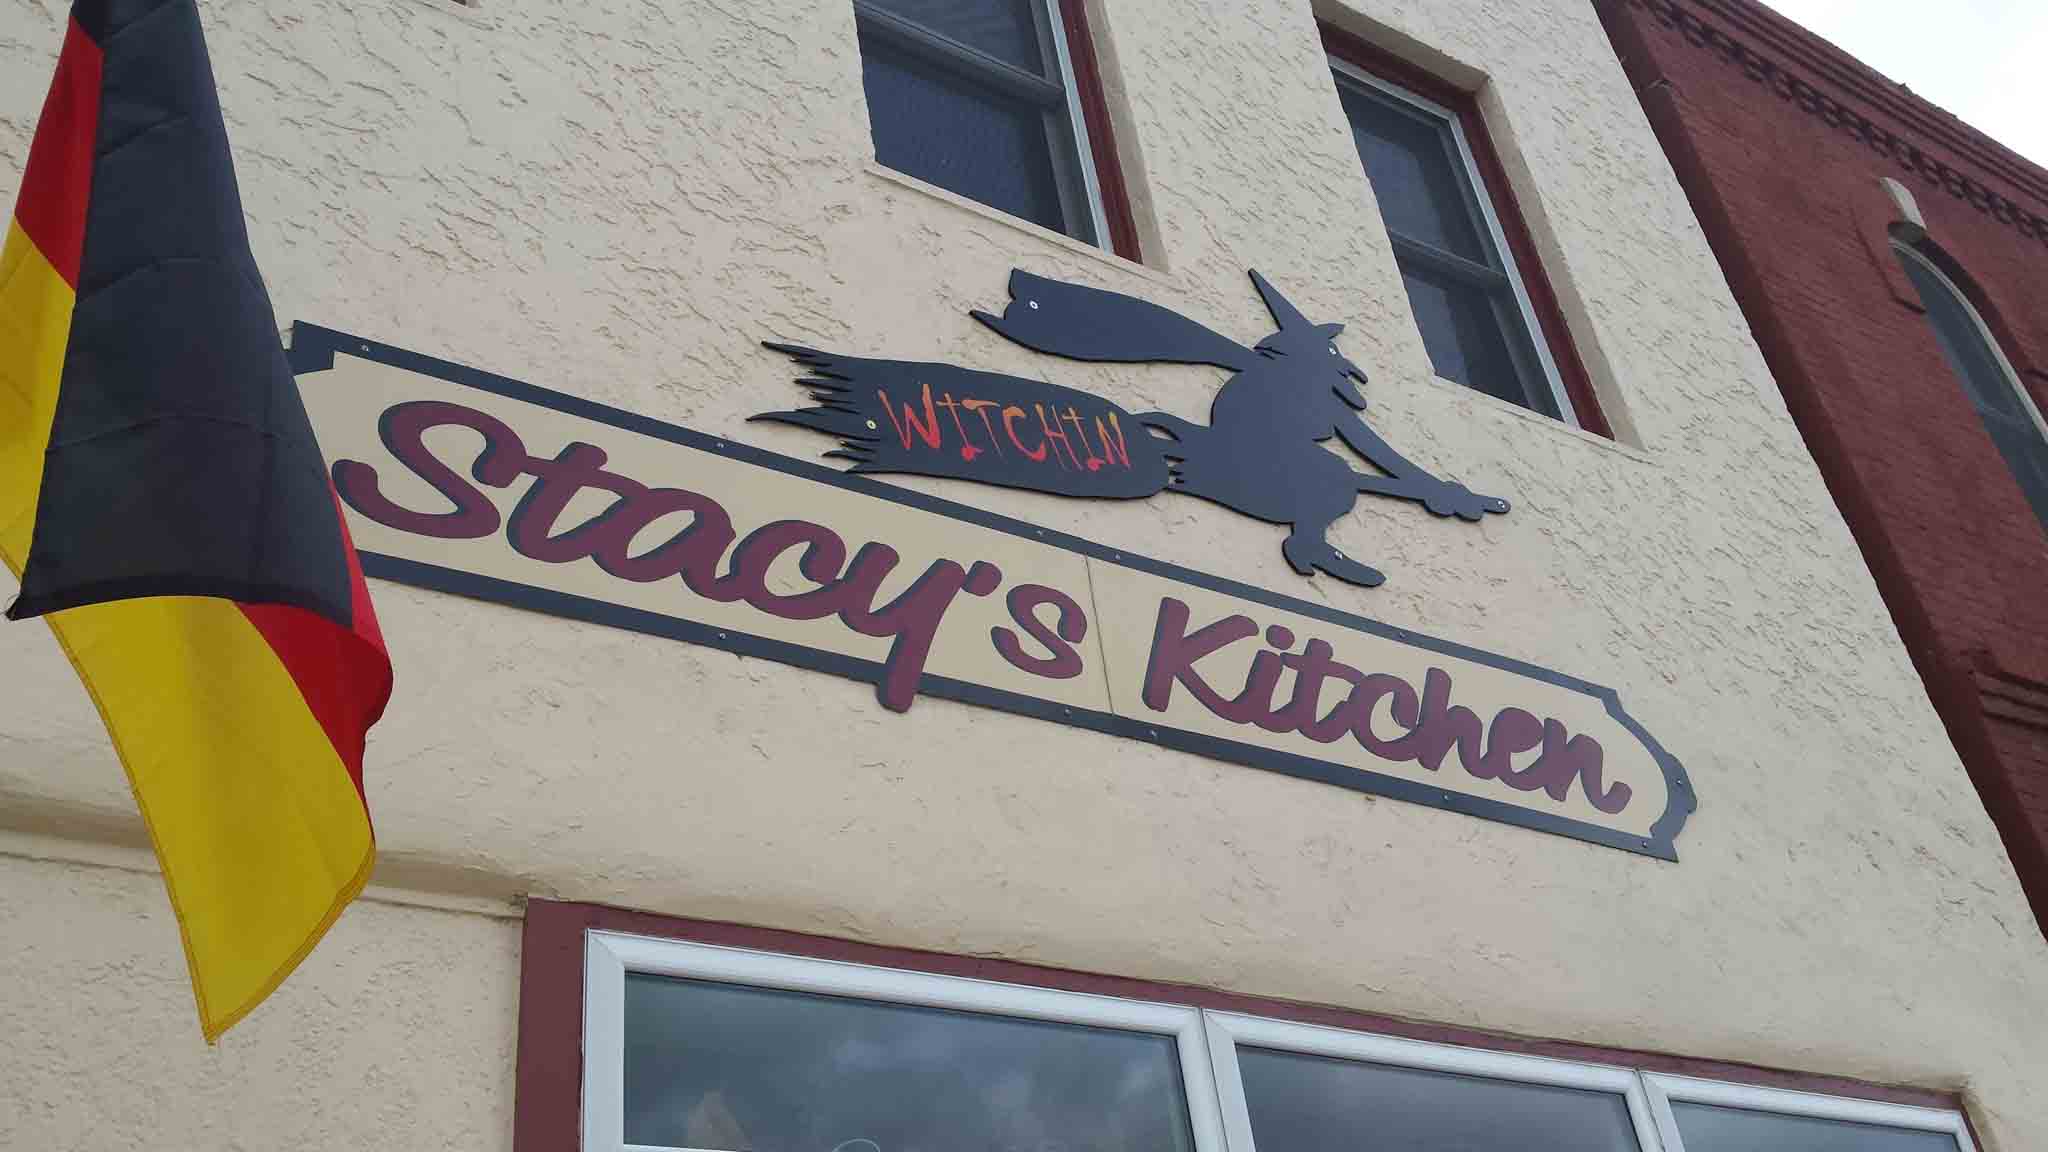 Stacy’s Kitchen